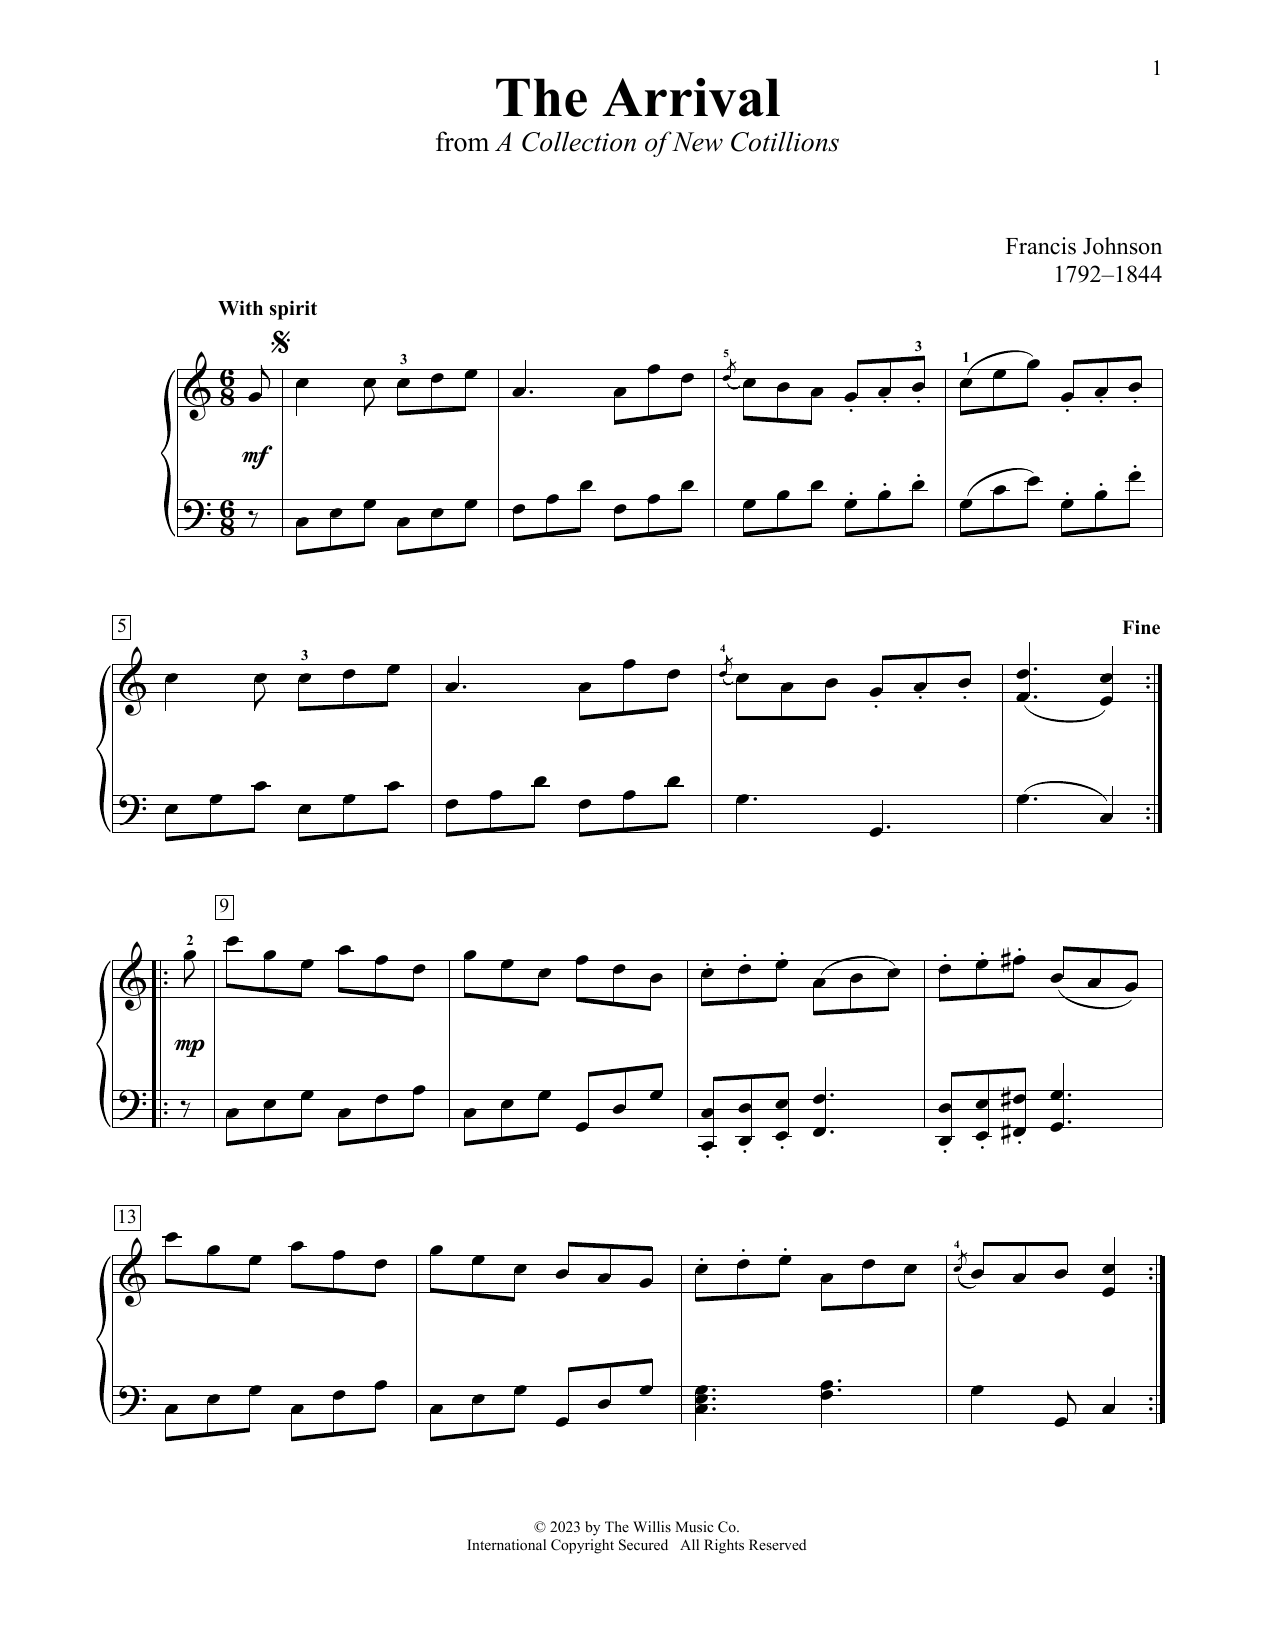 Francis Johnson The Arrival sheet music notes printable PDF score